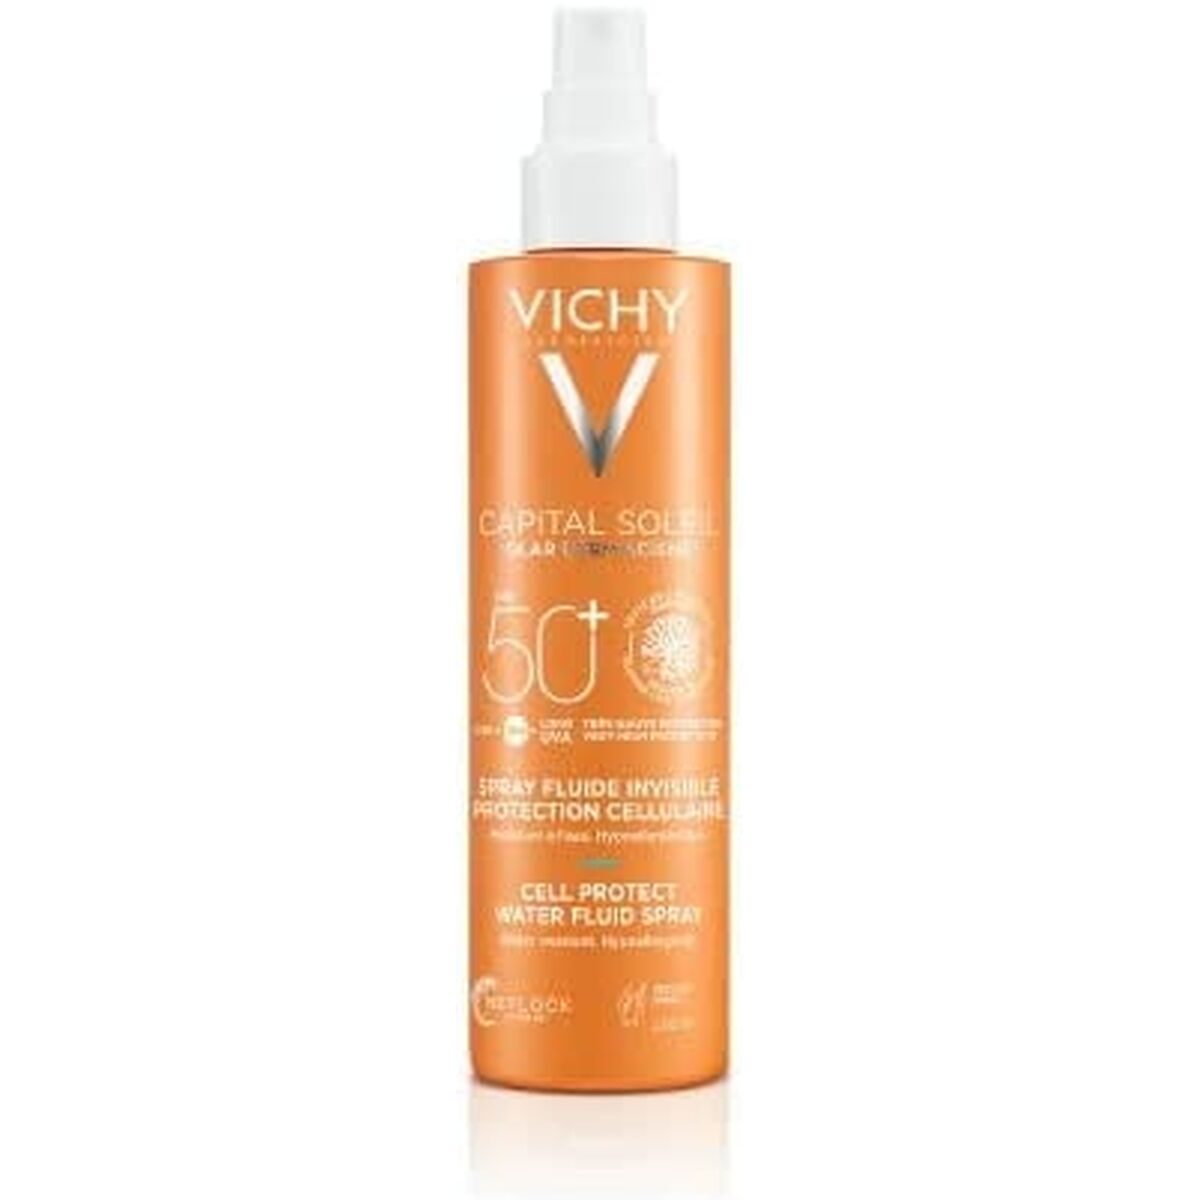 Body Sunscreen Spray Vichy Capital Soleil 200 ml